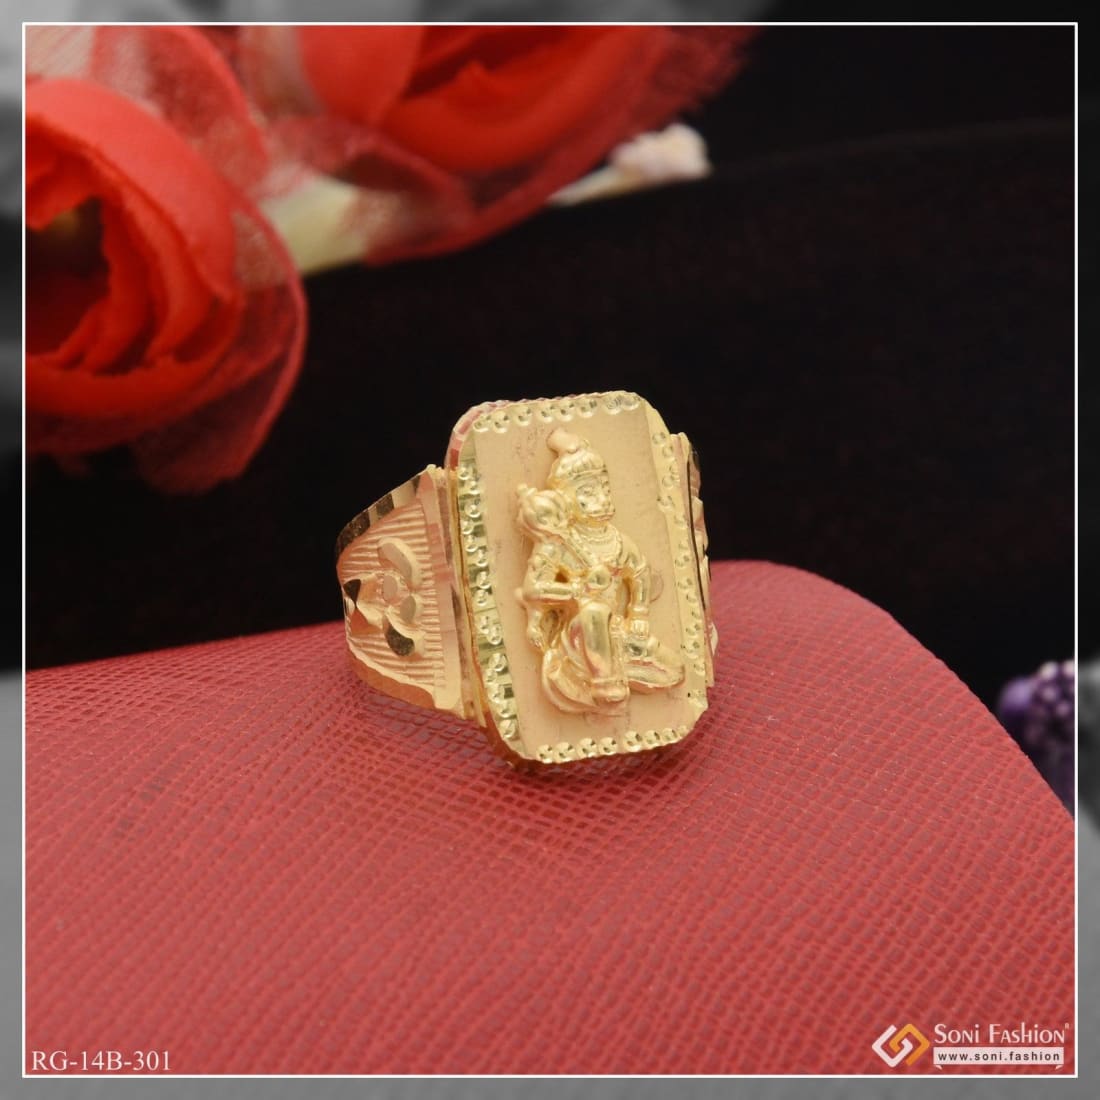 Premium Photo | Illustration of complete hanuman ji scriptures on Gold ring